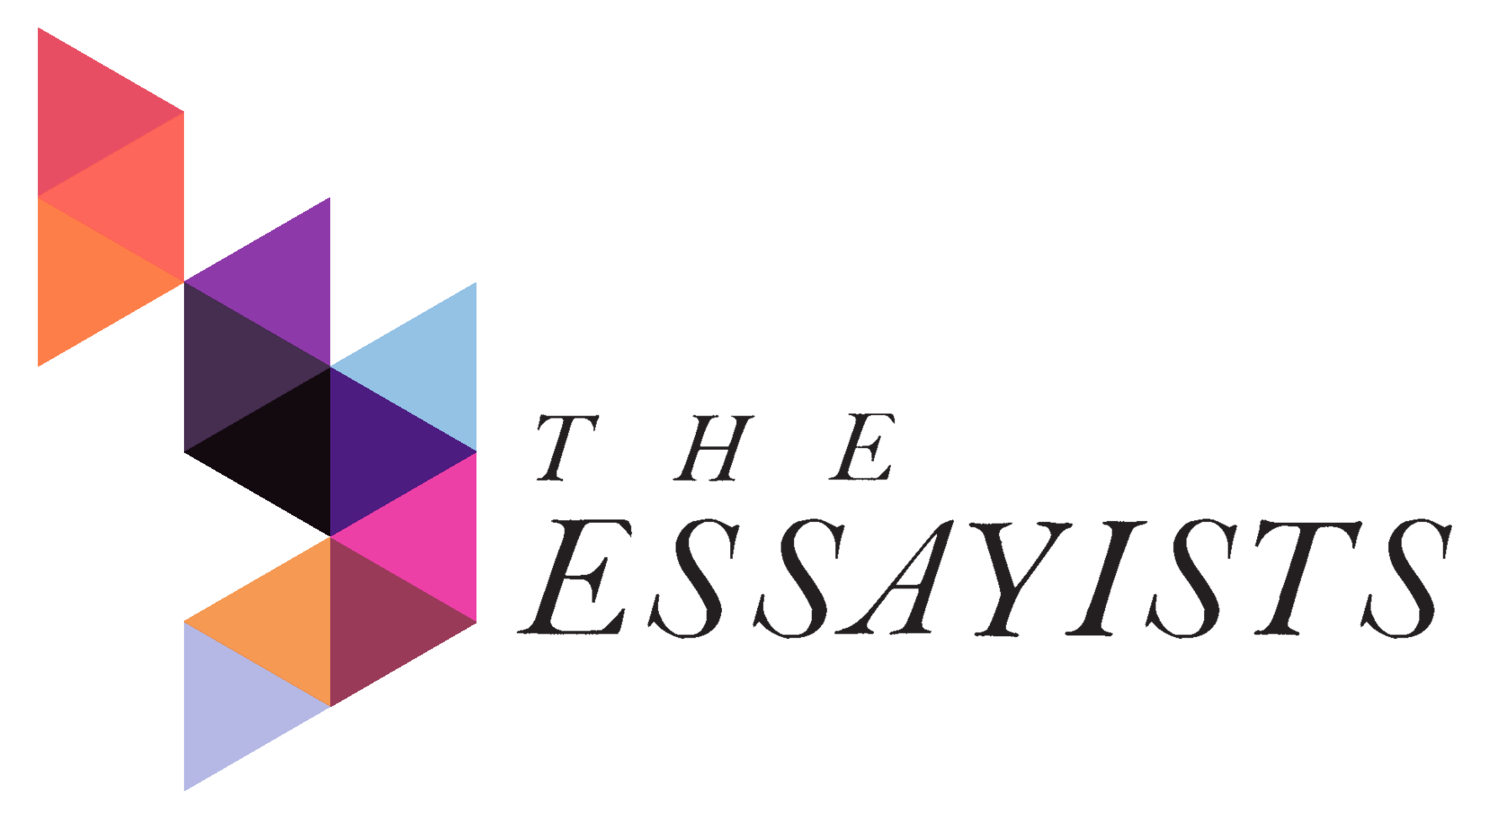 The Essayists